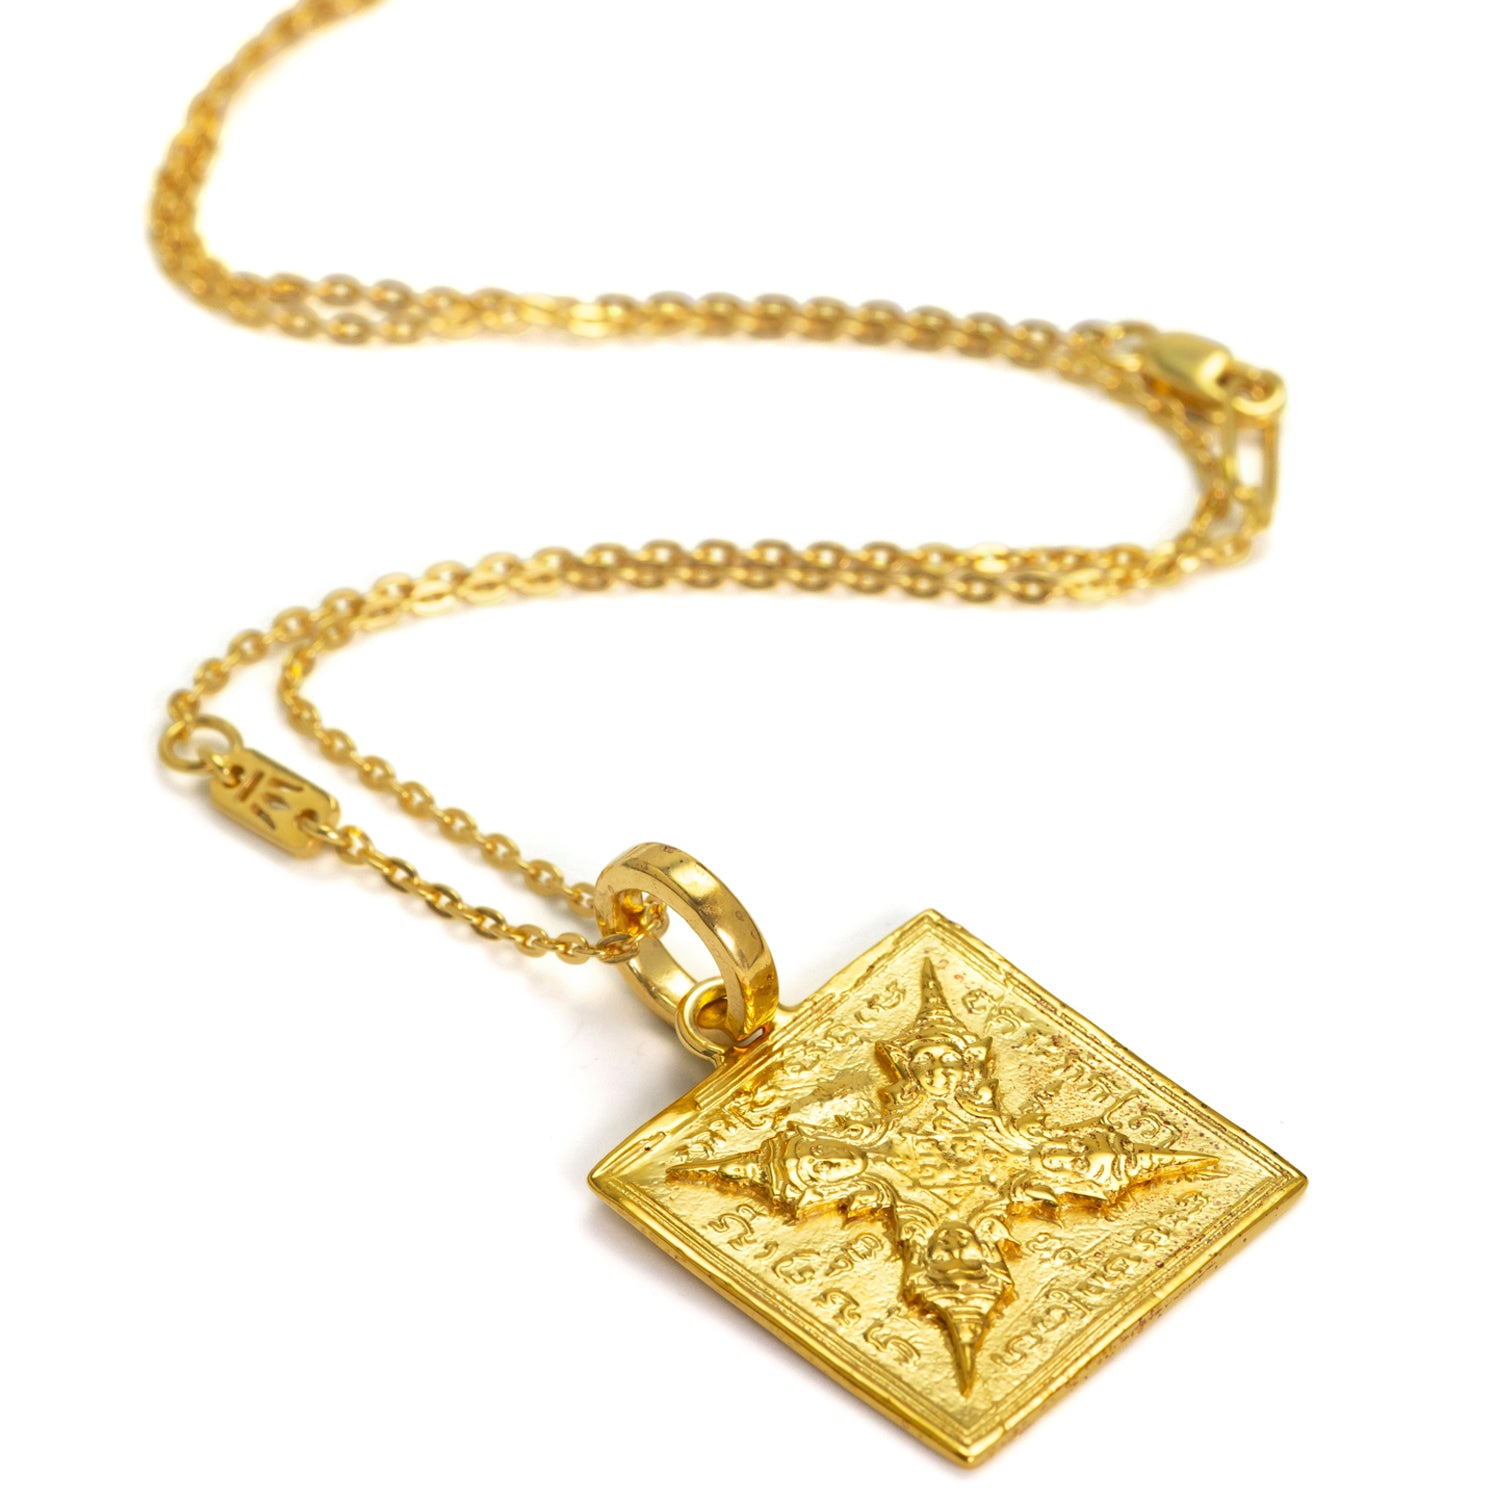 Gold-plated Buddha symbol pendant by ETERNAL BLISS - Spiritual jewellery